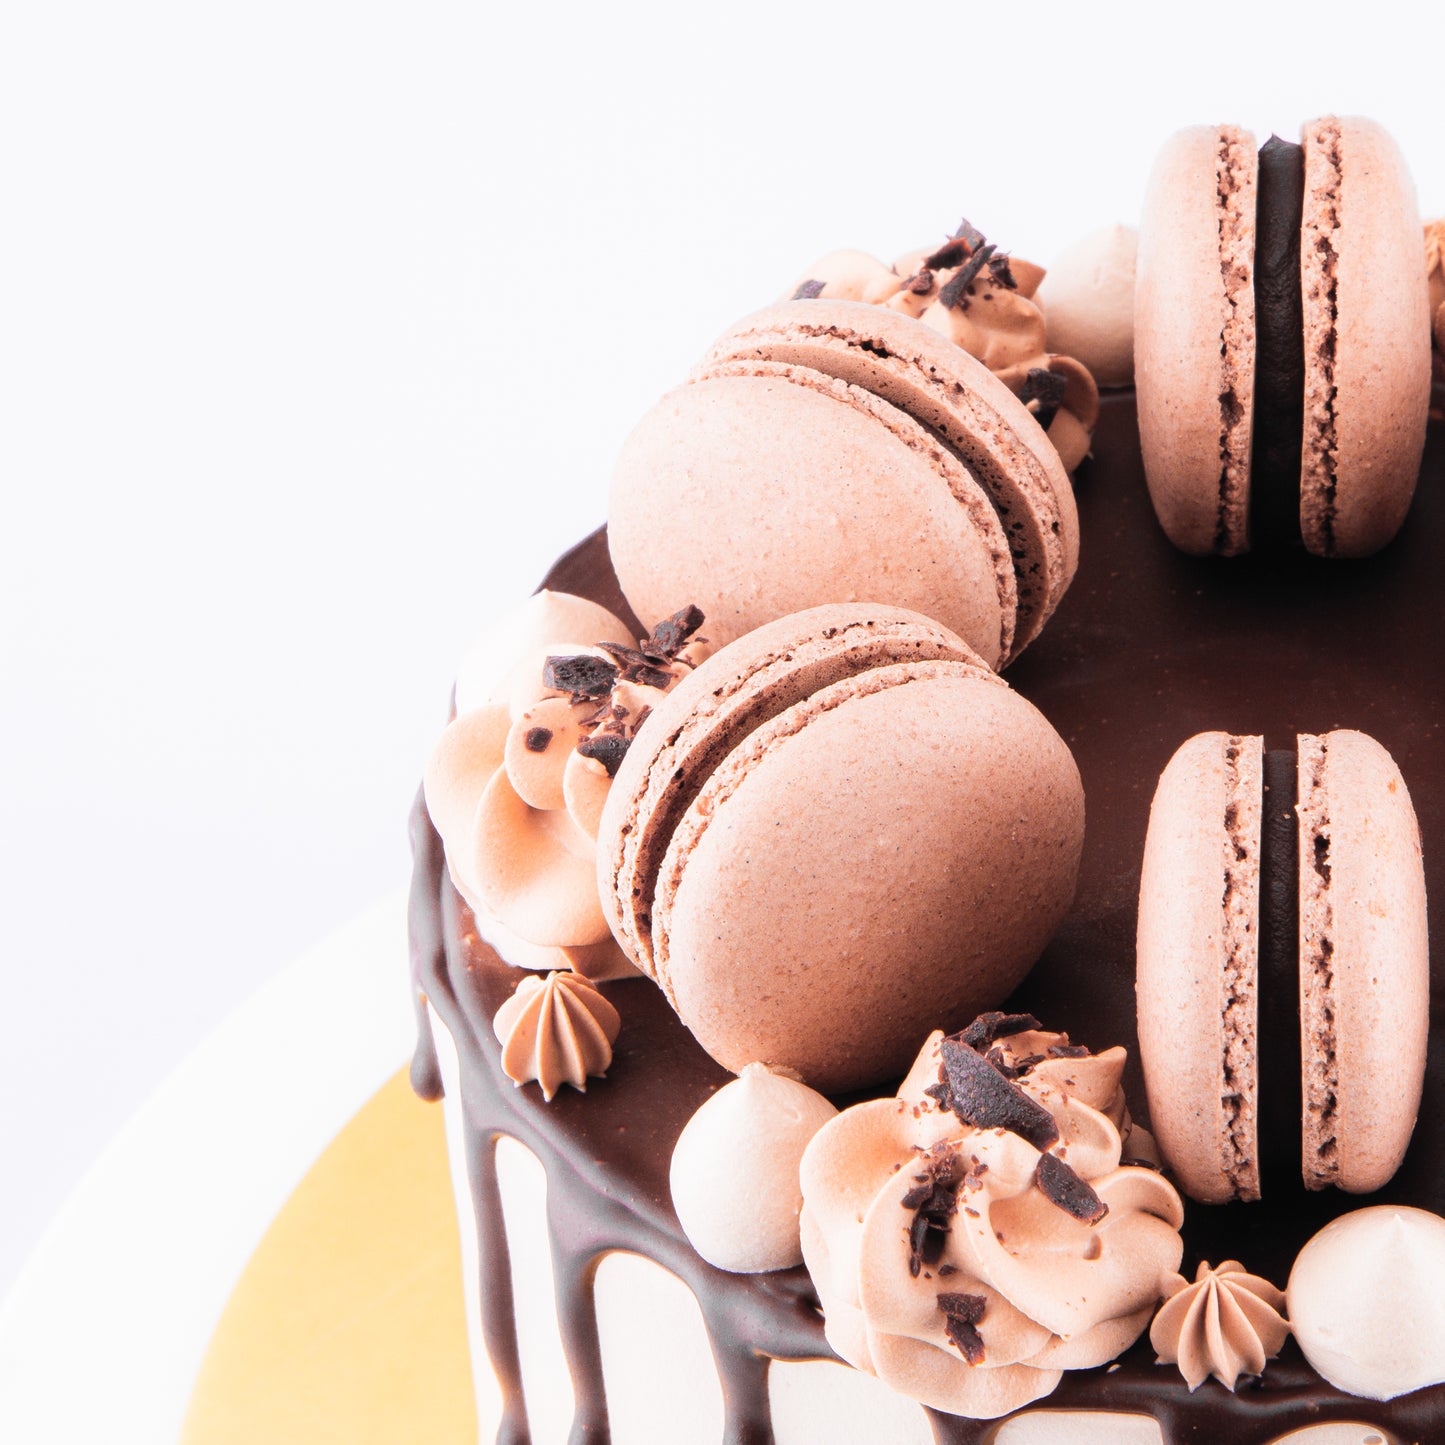 Sales! Chocolate Truffle Cake Upsize (Including  6 pcs macarons)| $65.80 nett only